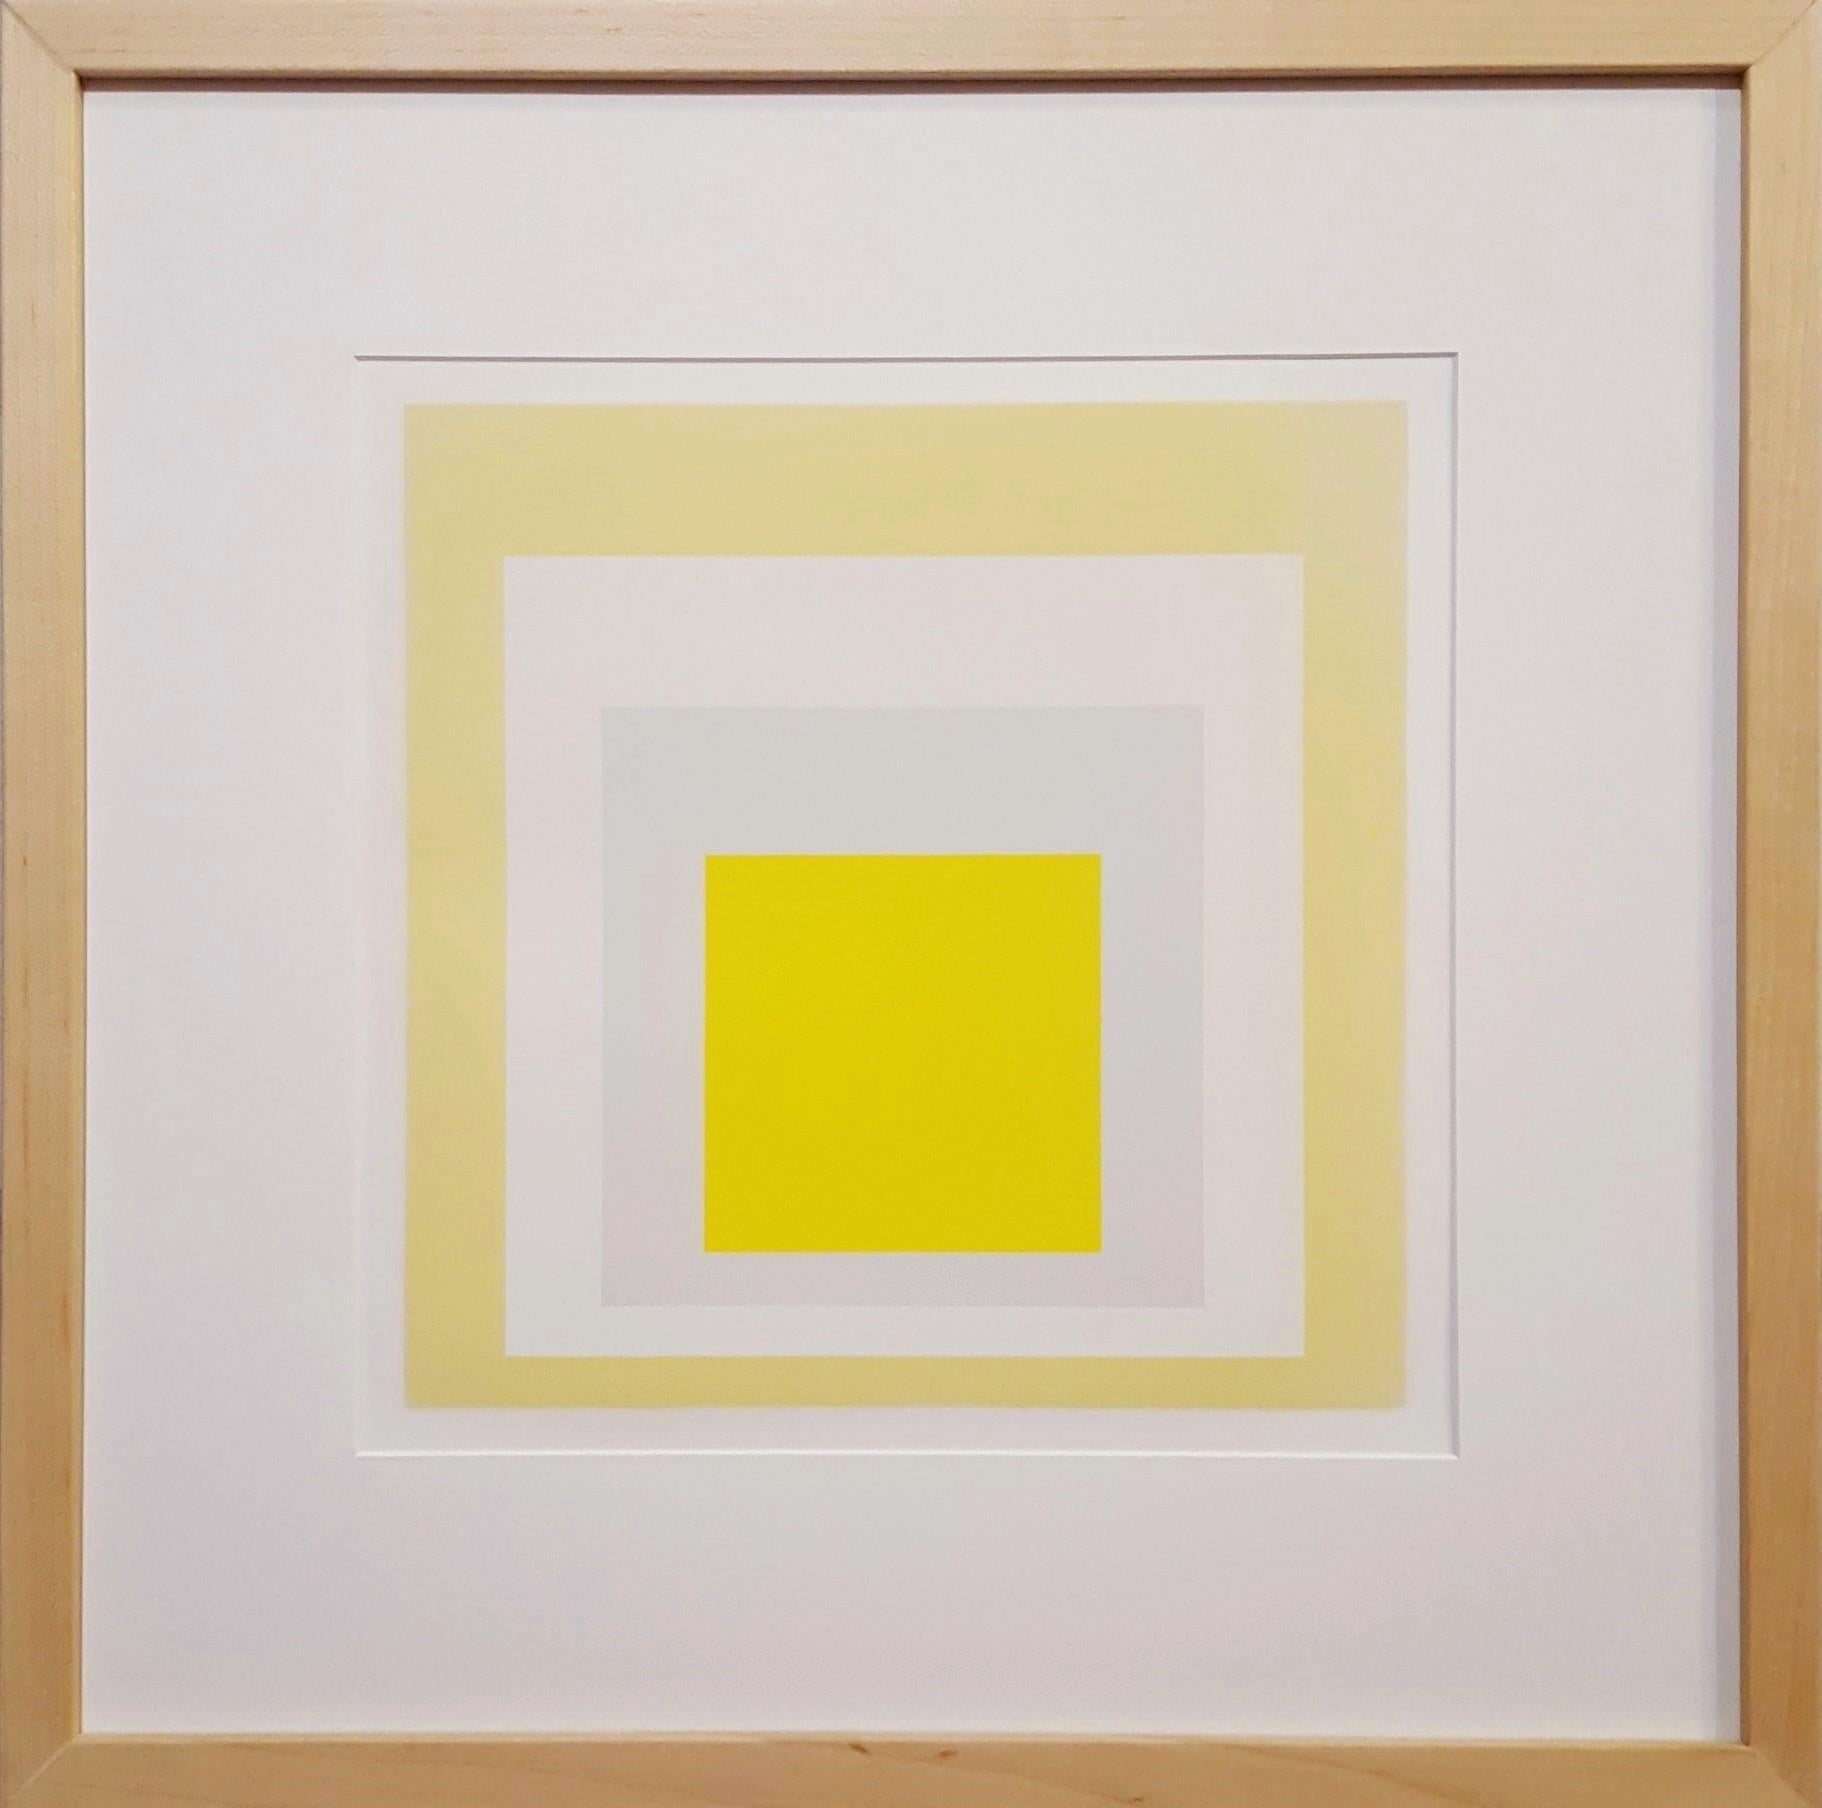 Joy - Abstract Geometric Print by Josef Albers